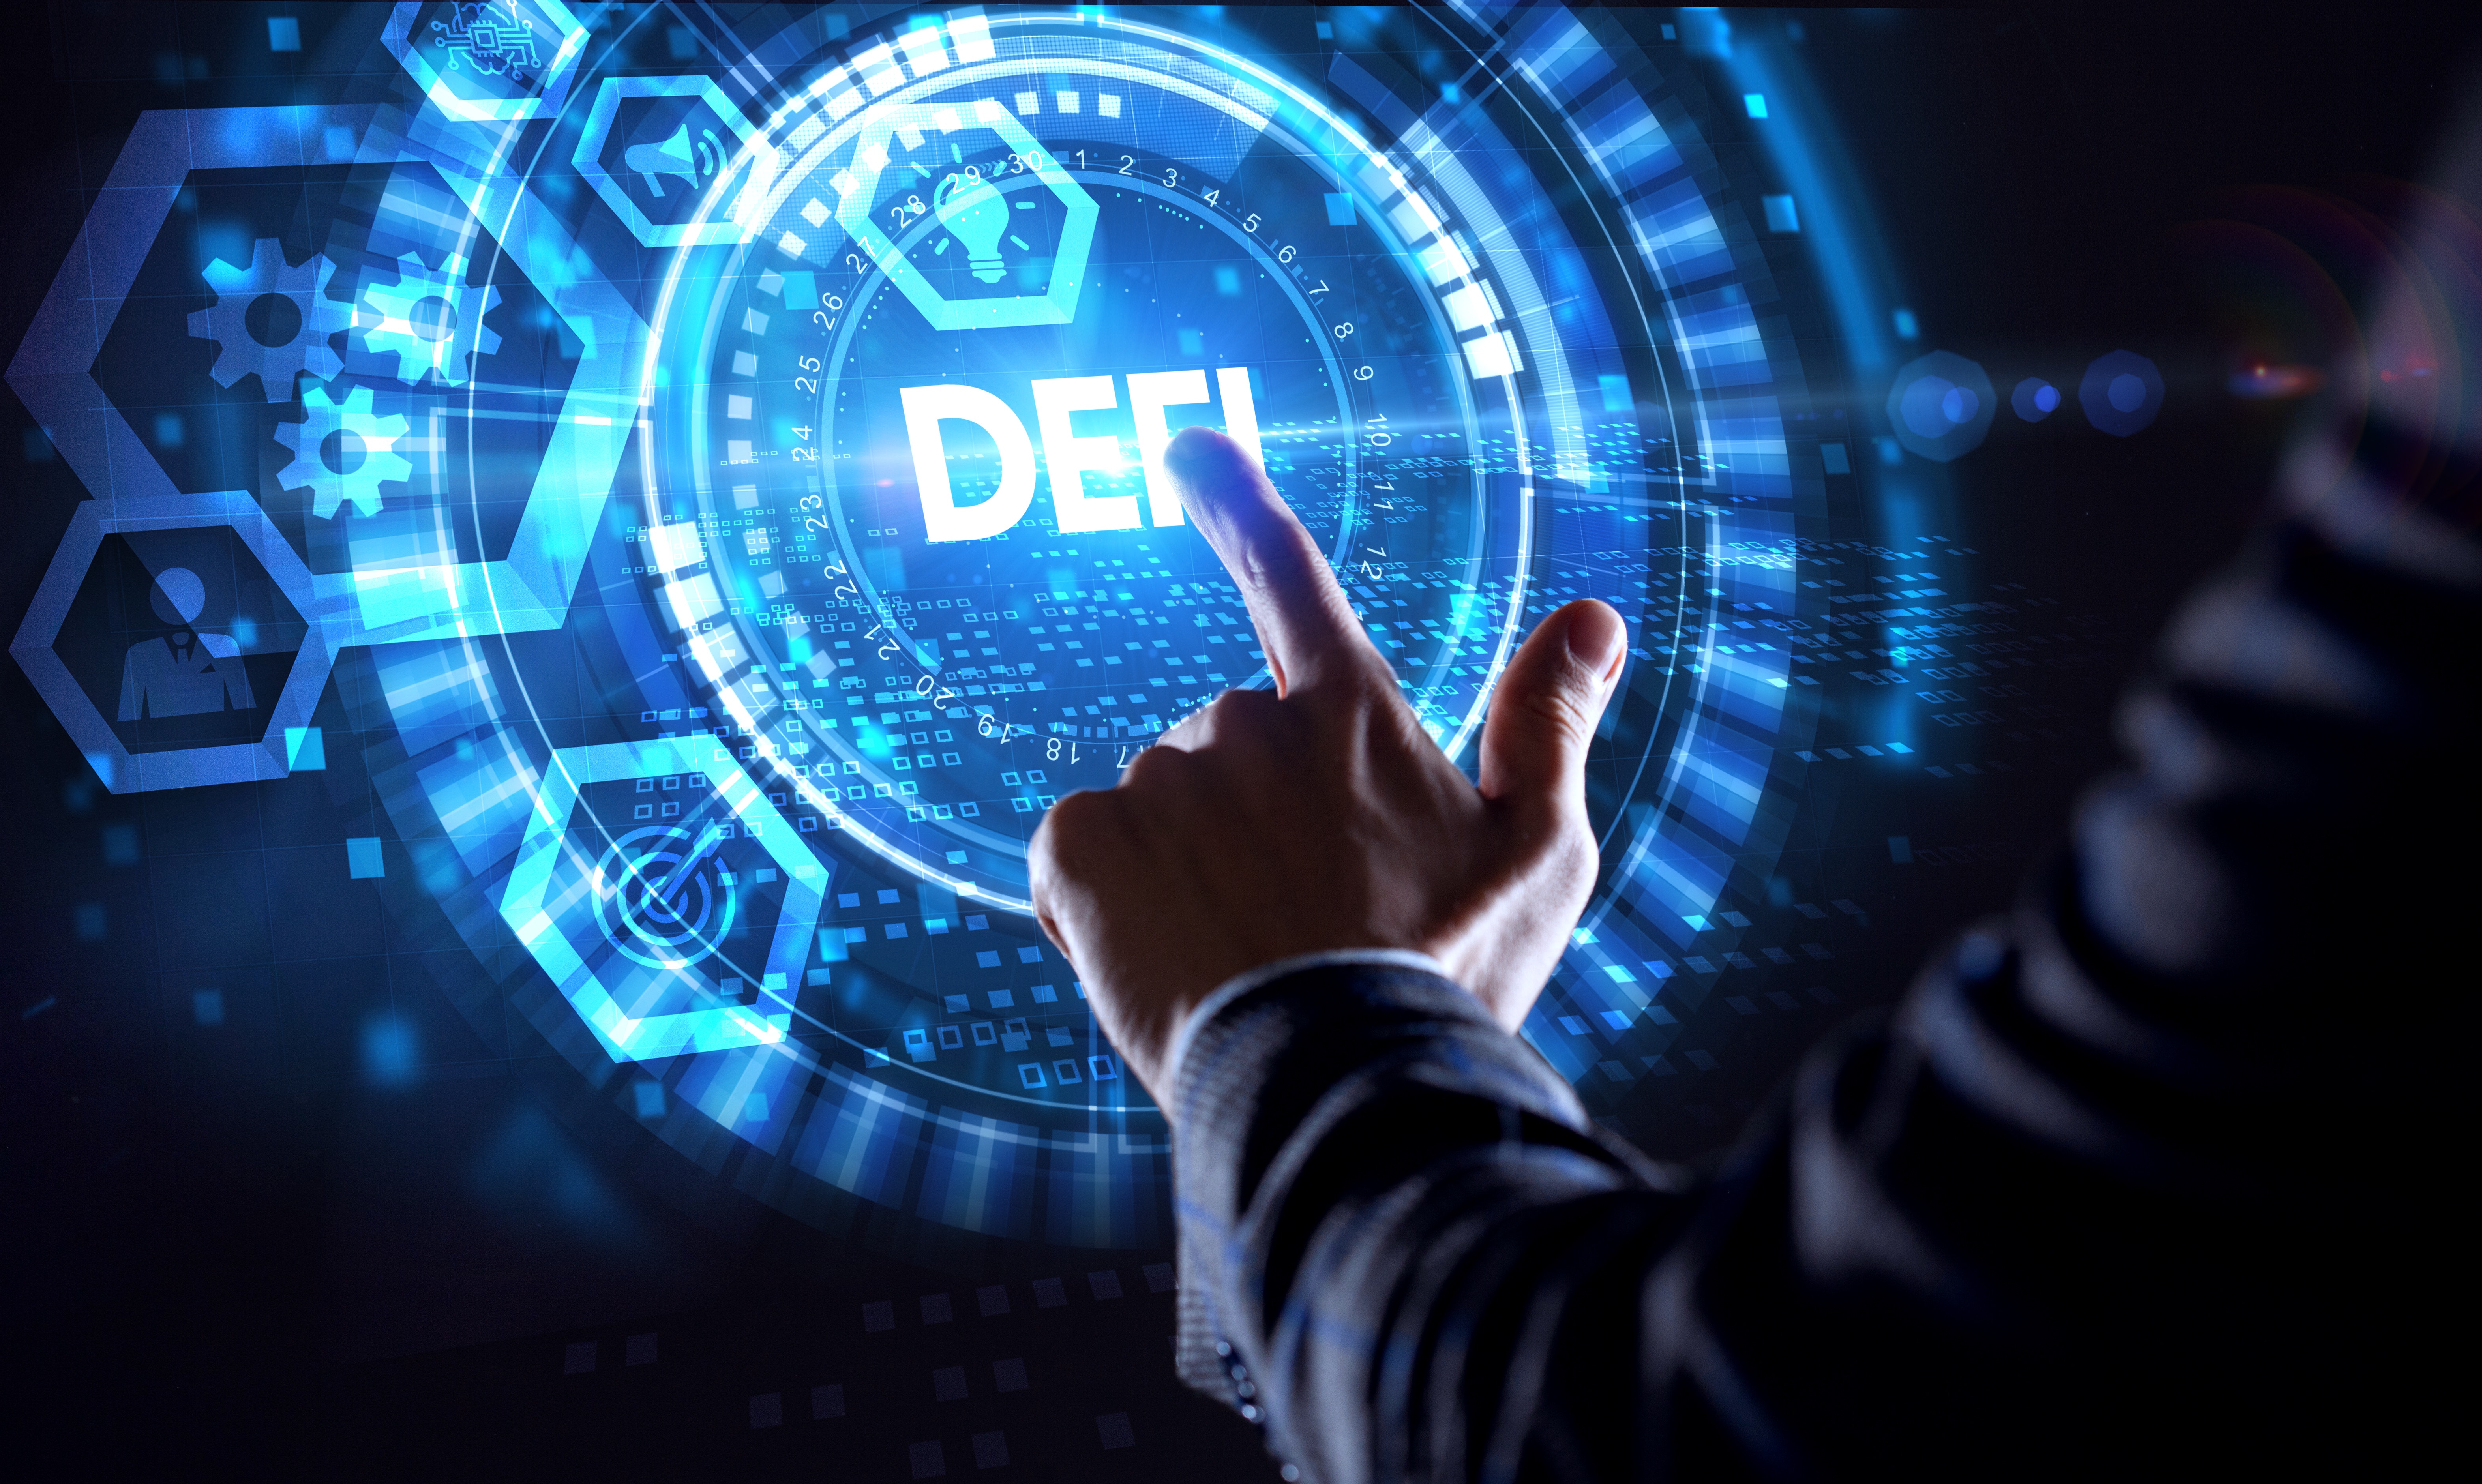 DeFi Has Lost 45% of Its Value Since April End: DappRadar